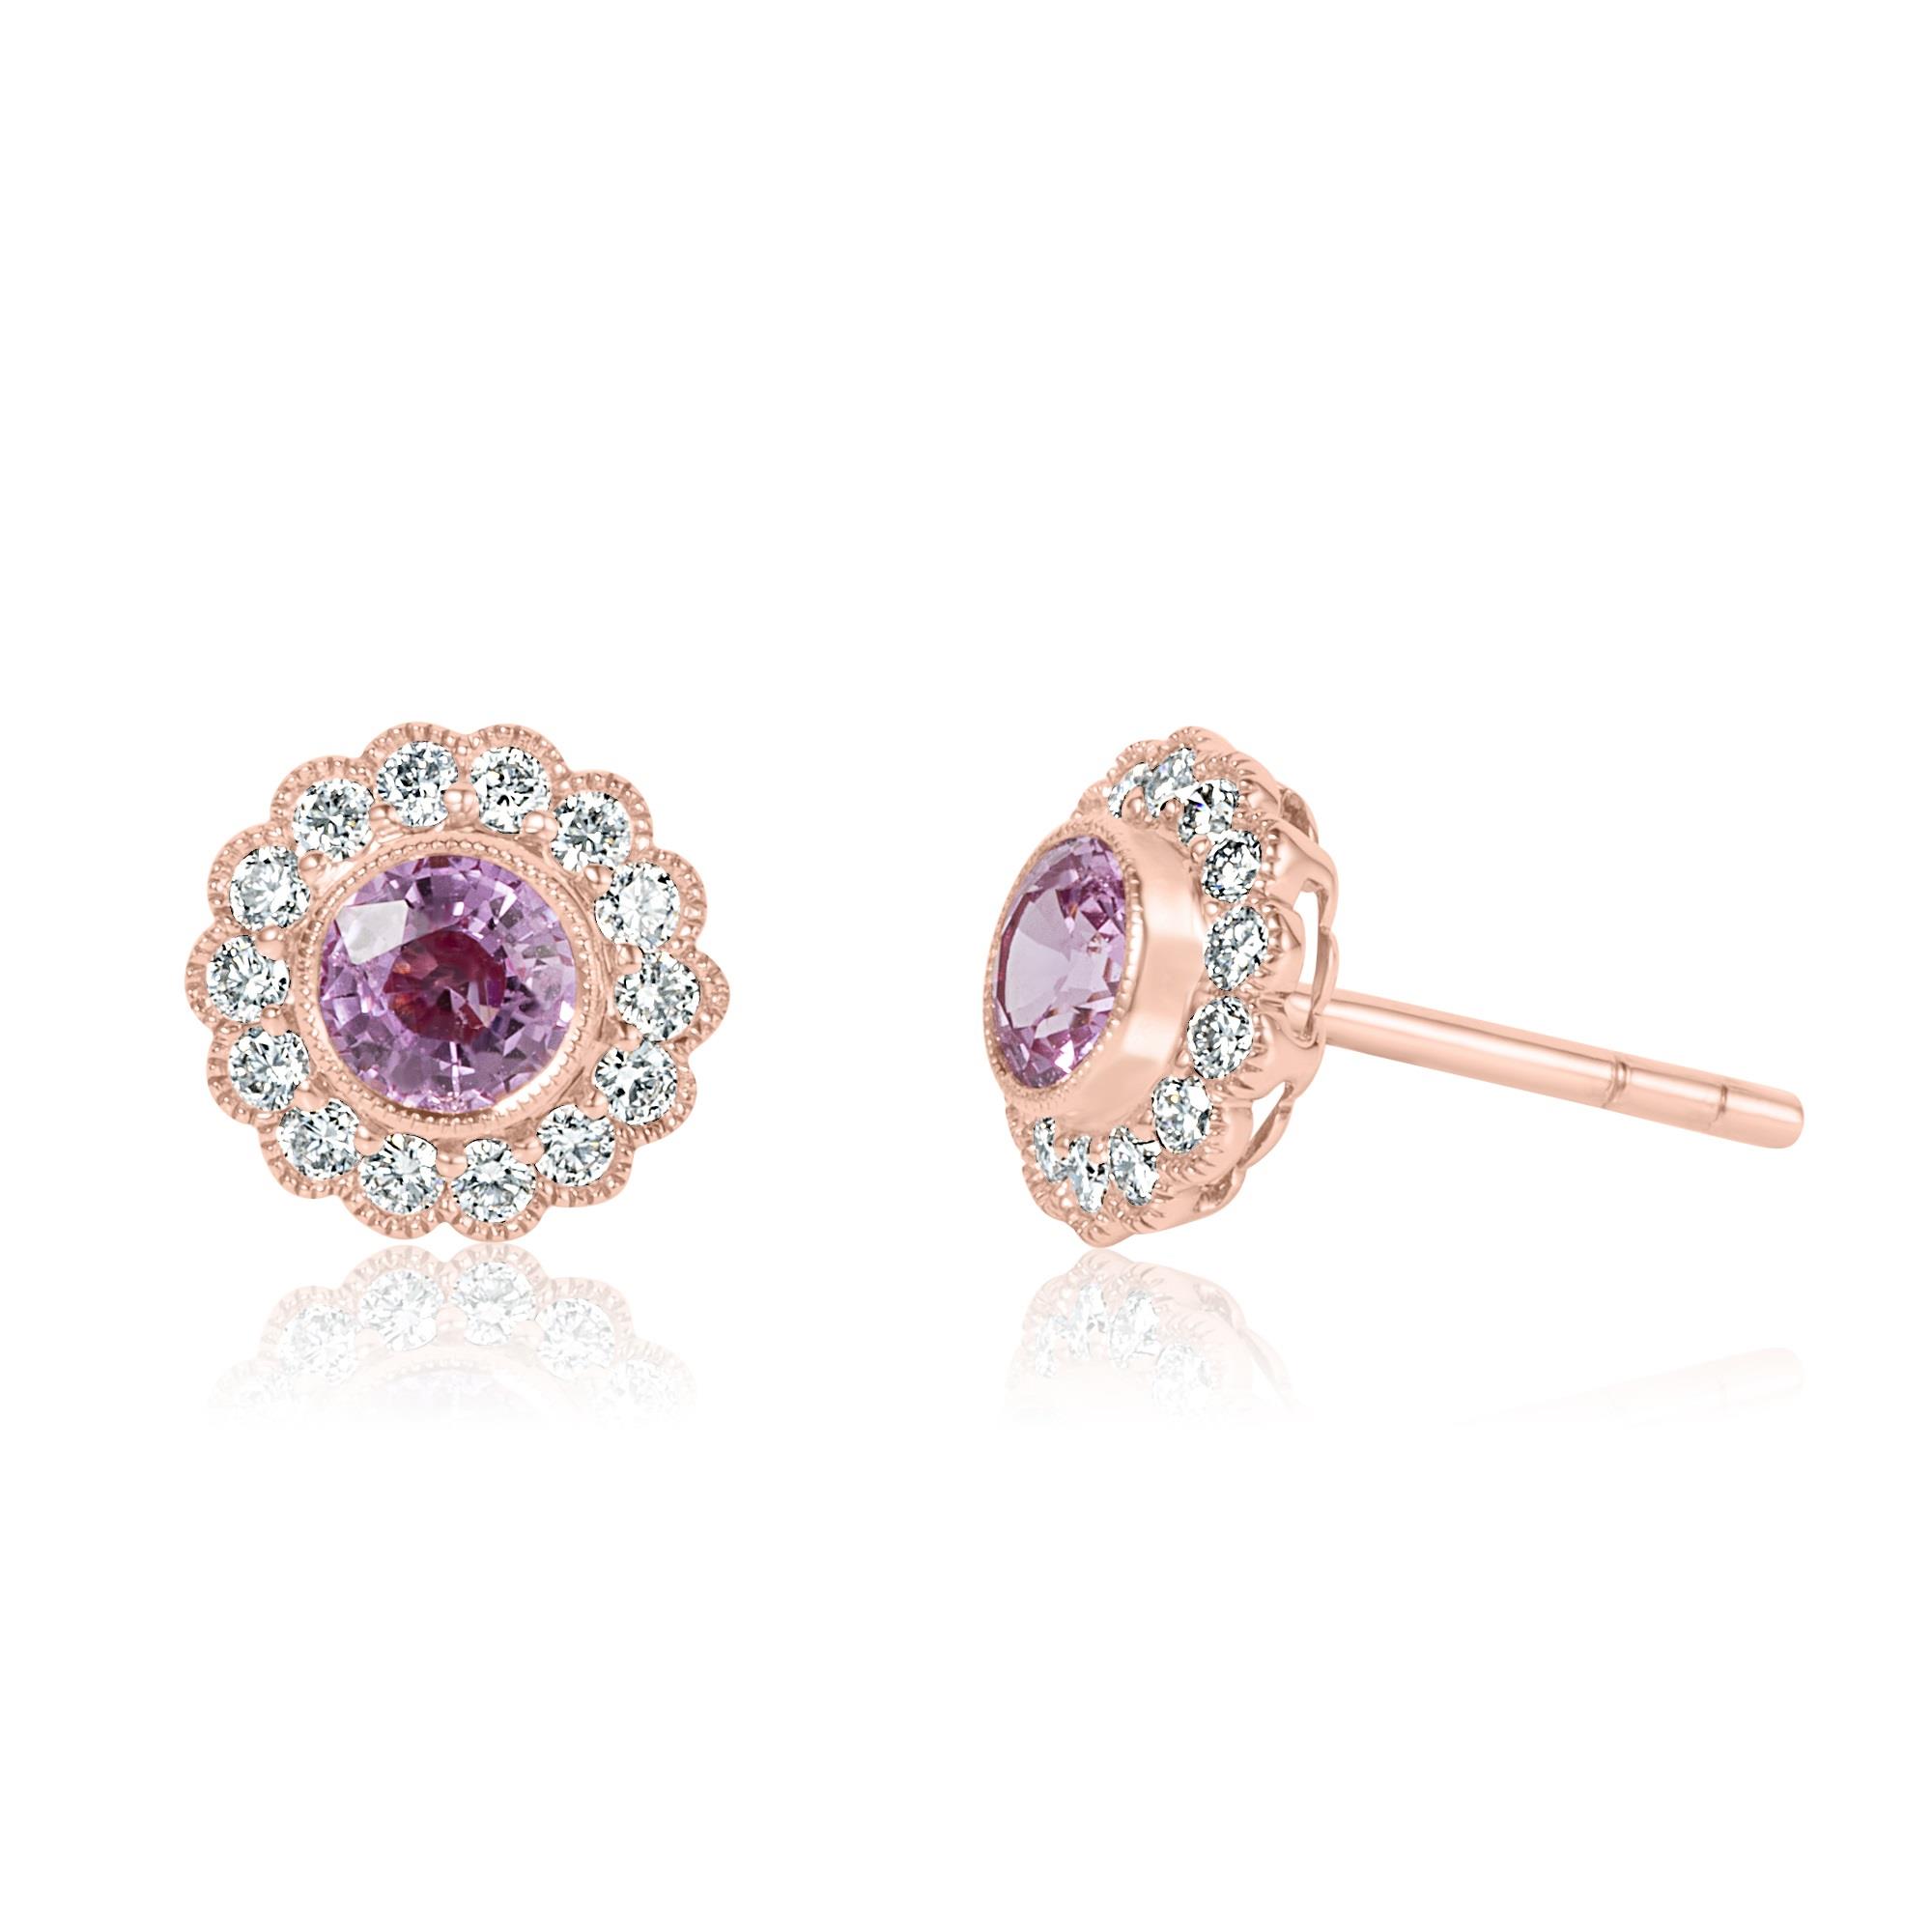 Pink Sapphire and Diamond Stud Earrings | Pravins